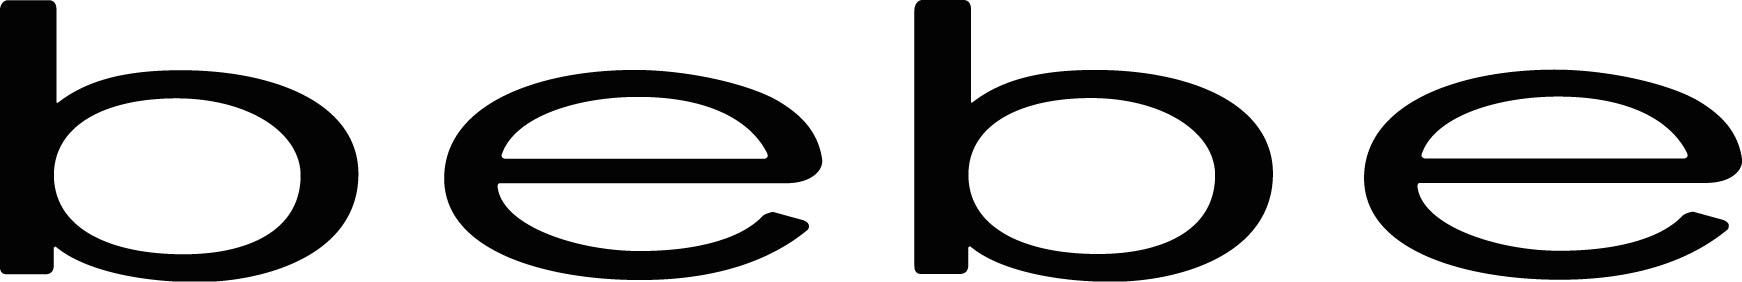 Bebe logo-woreg.jpg